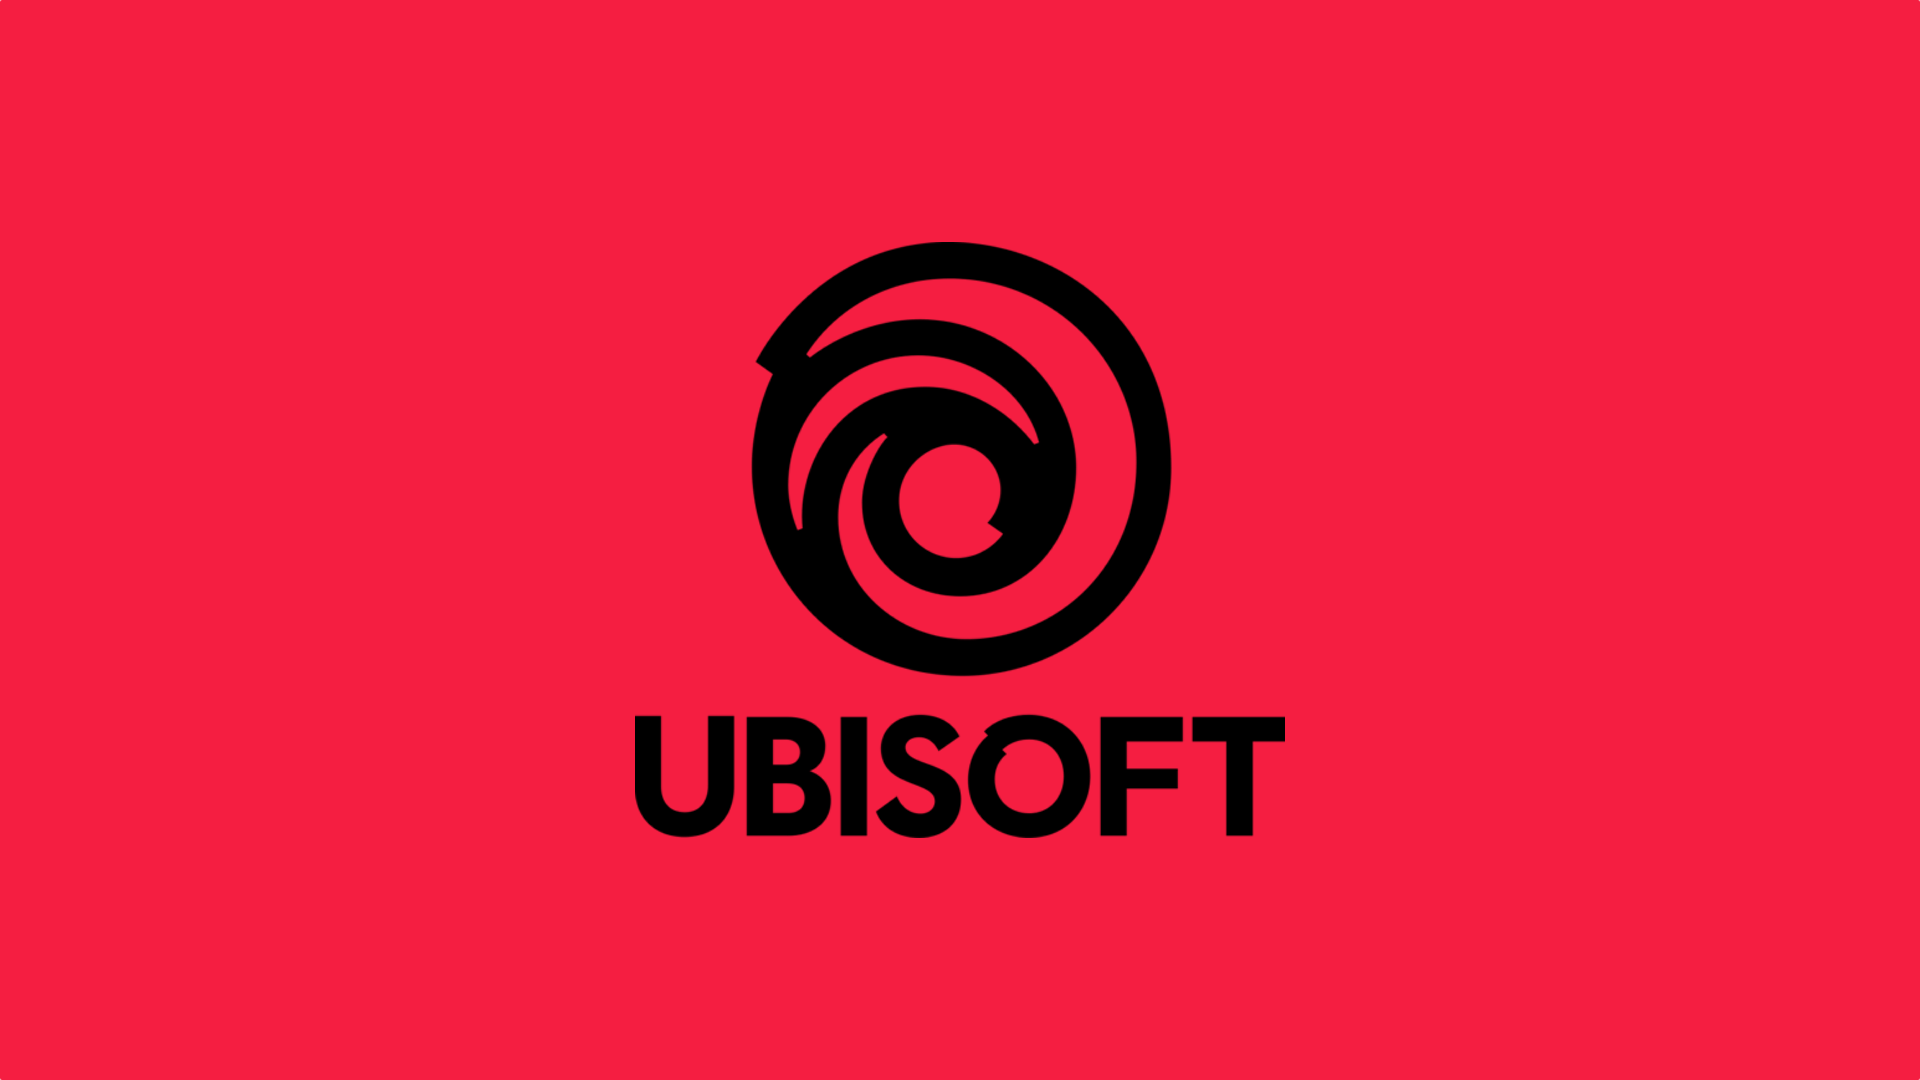 How to watch Ubisoft's E3 2019 live stream